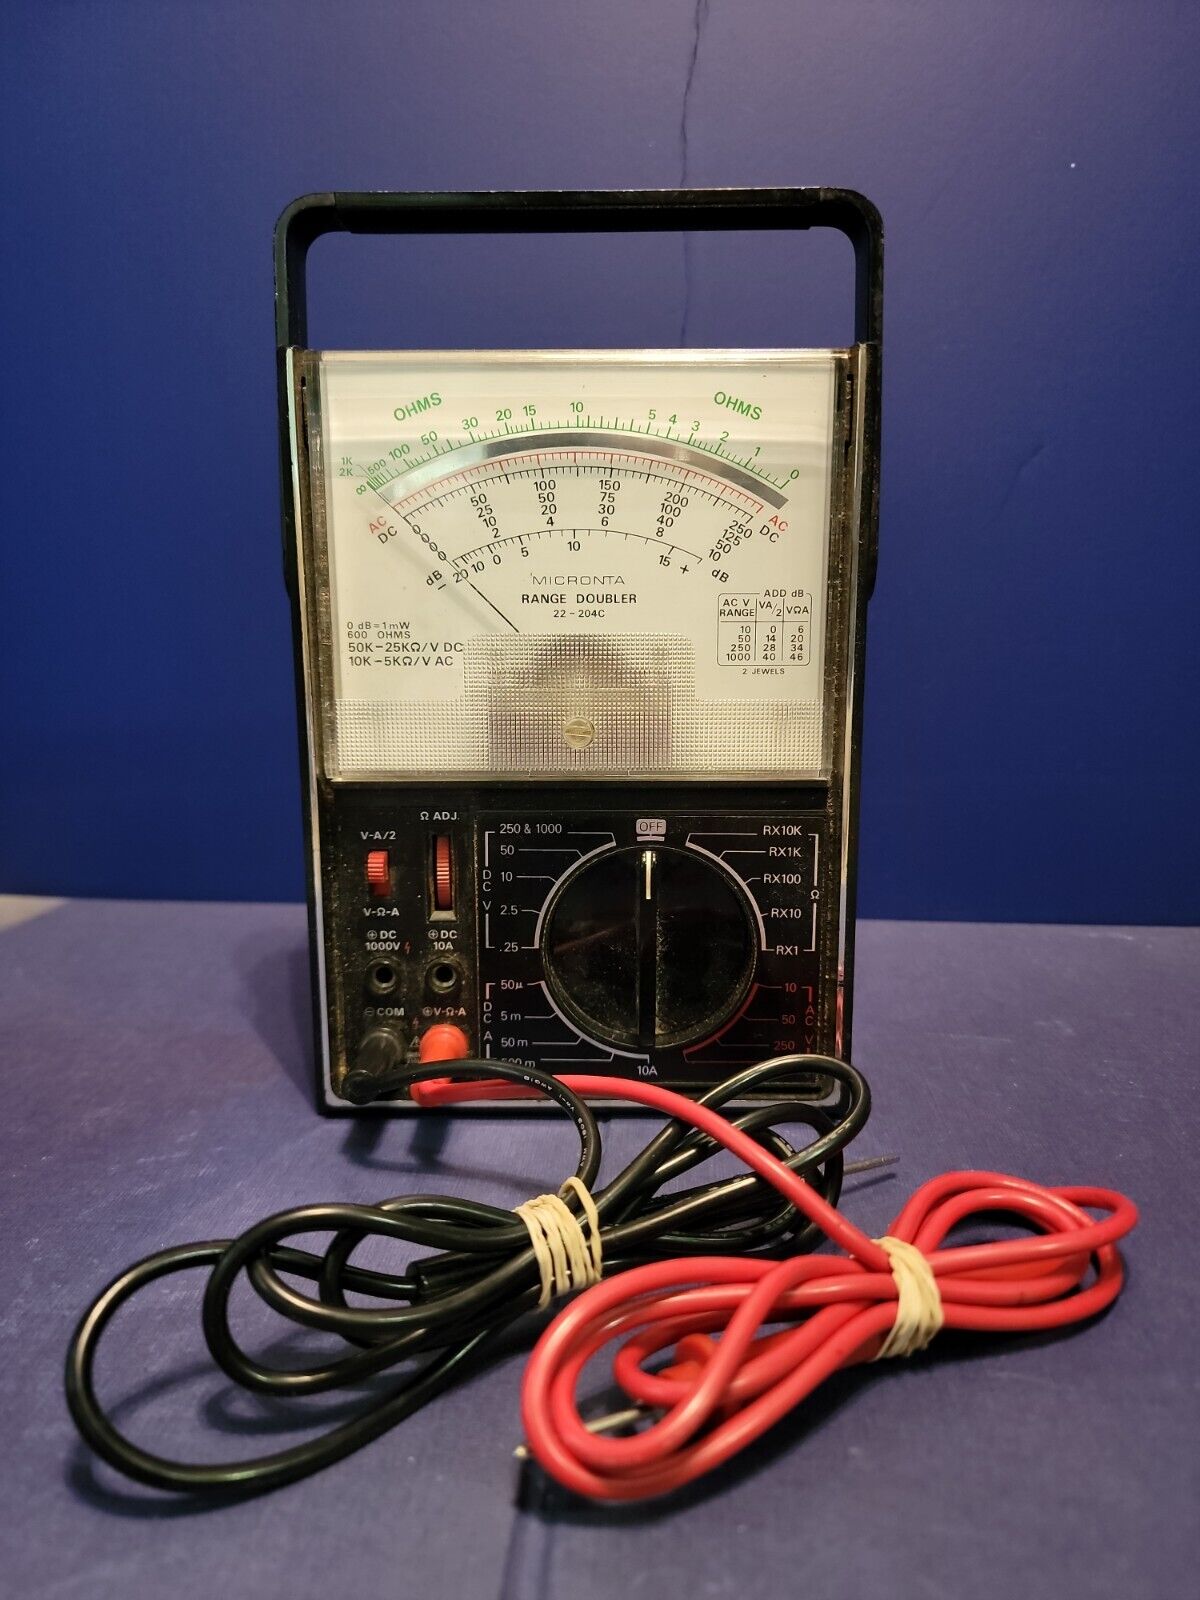 Micronta 22-204 C Volt Meter Radio Shack Tandy Corporation Vintage tested works 